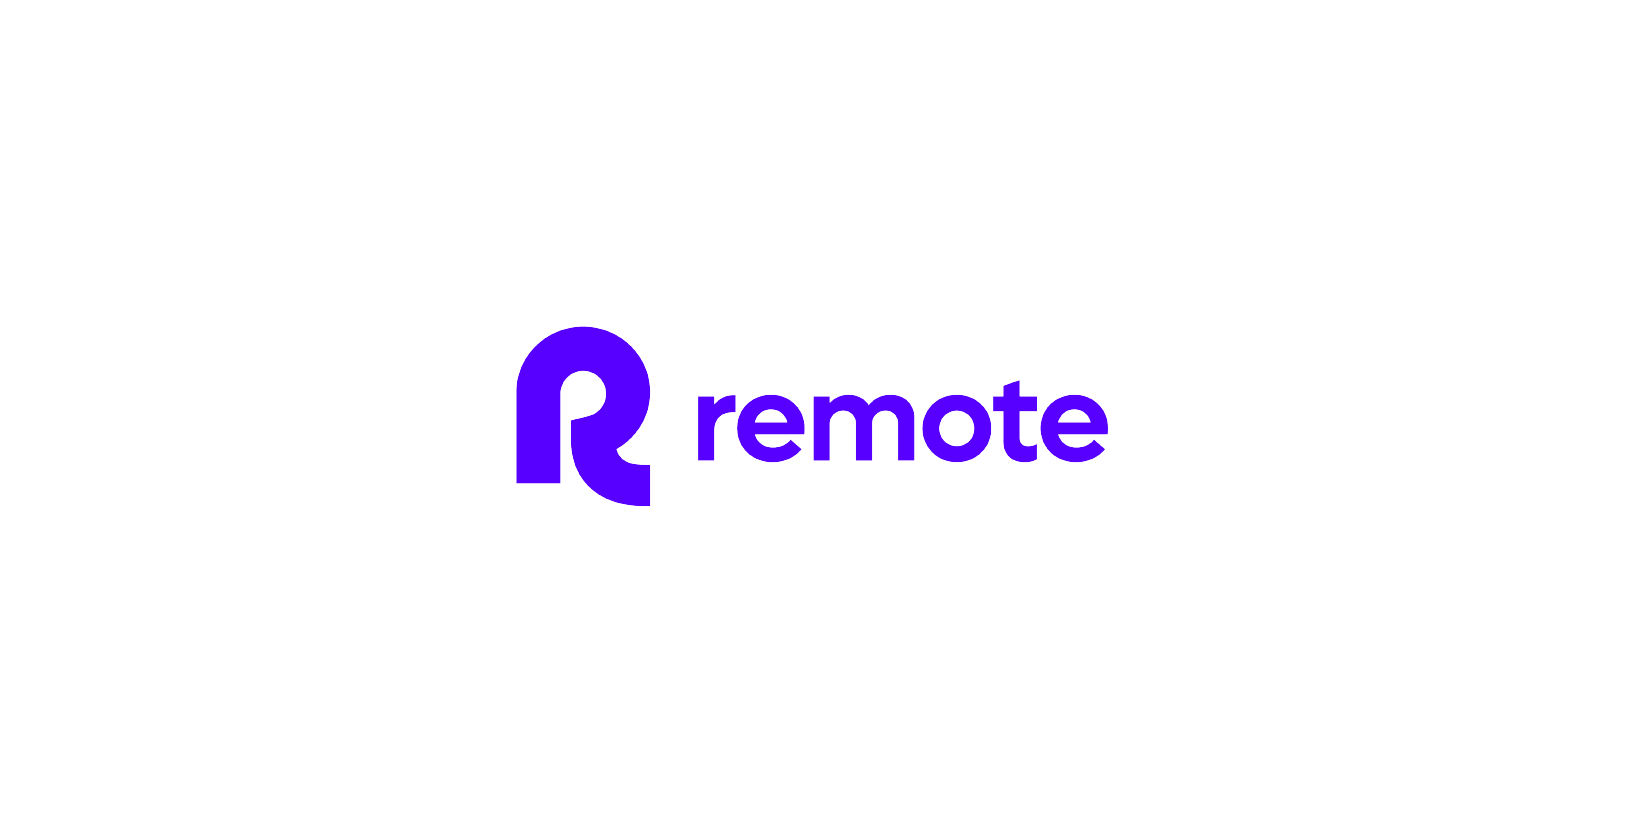 Vision Fund investment portfolio company Remote's logo